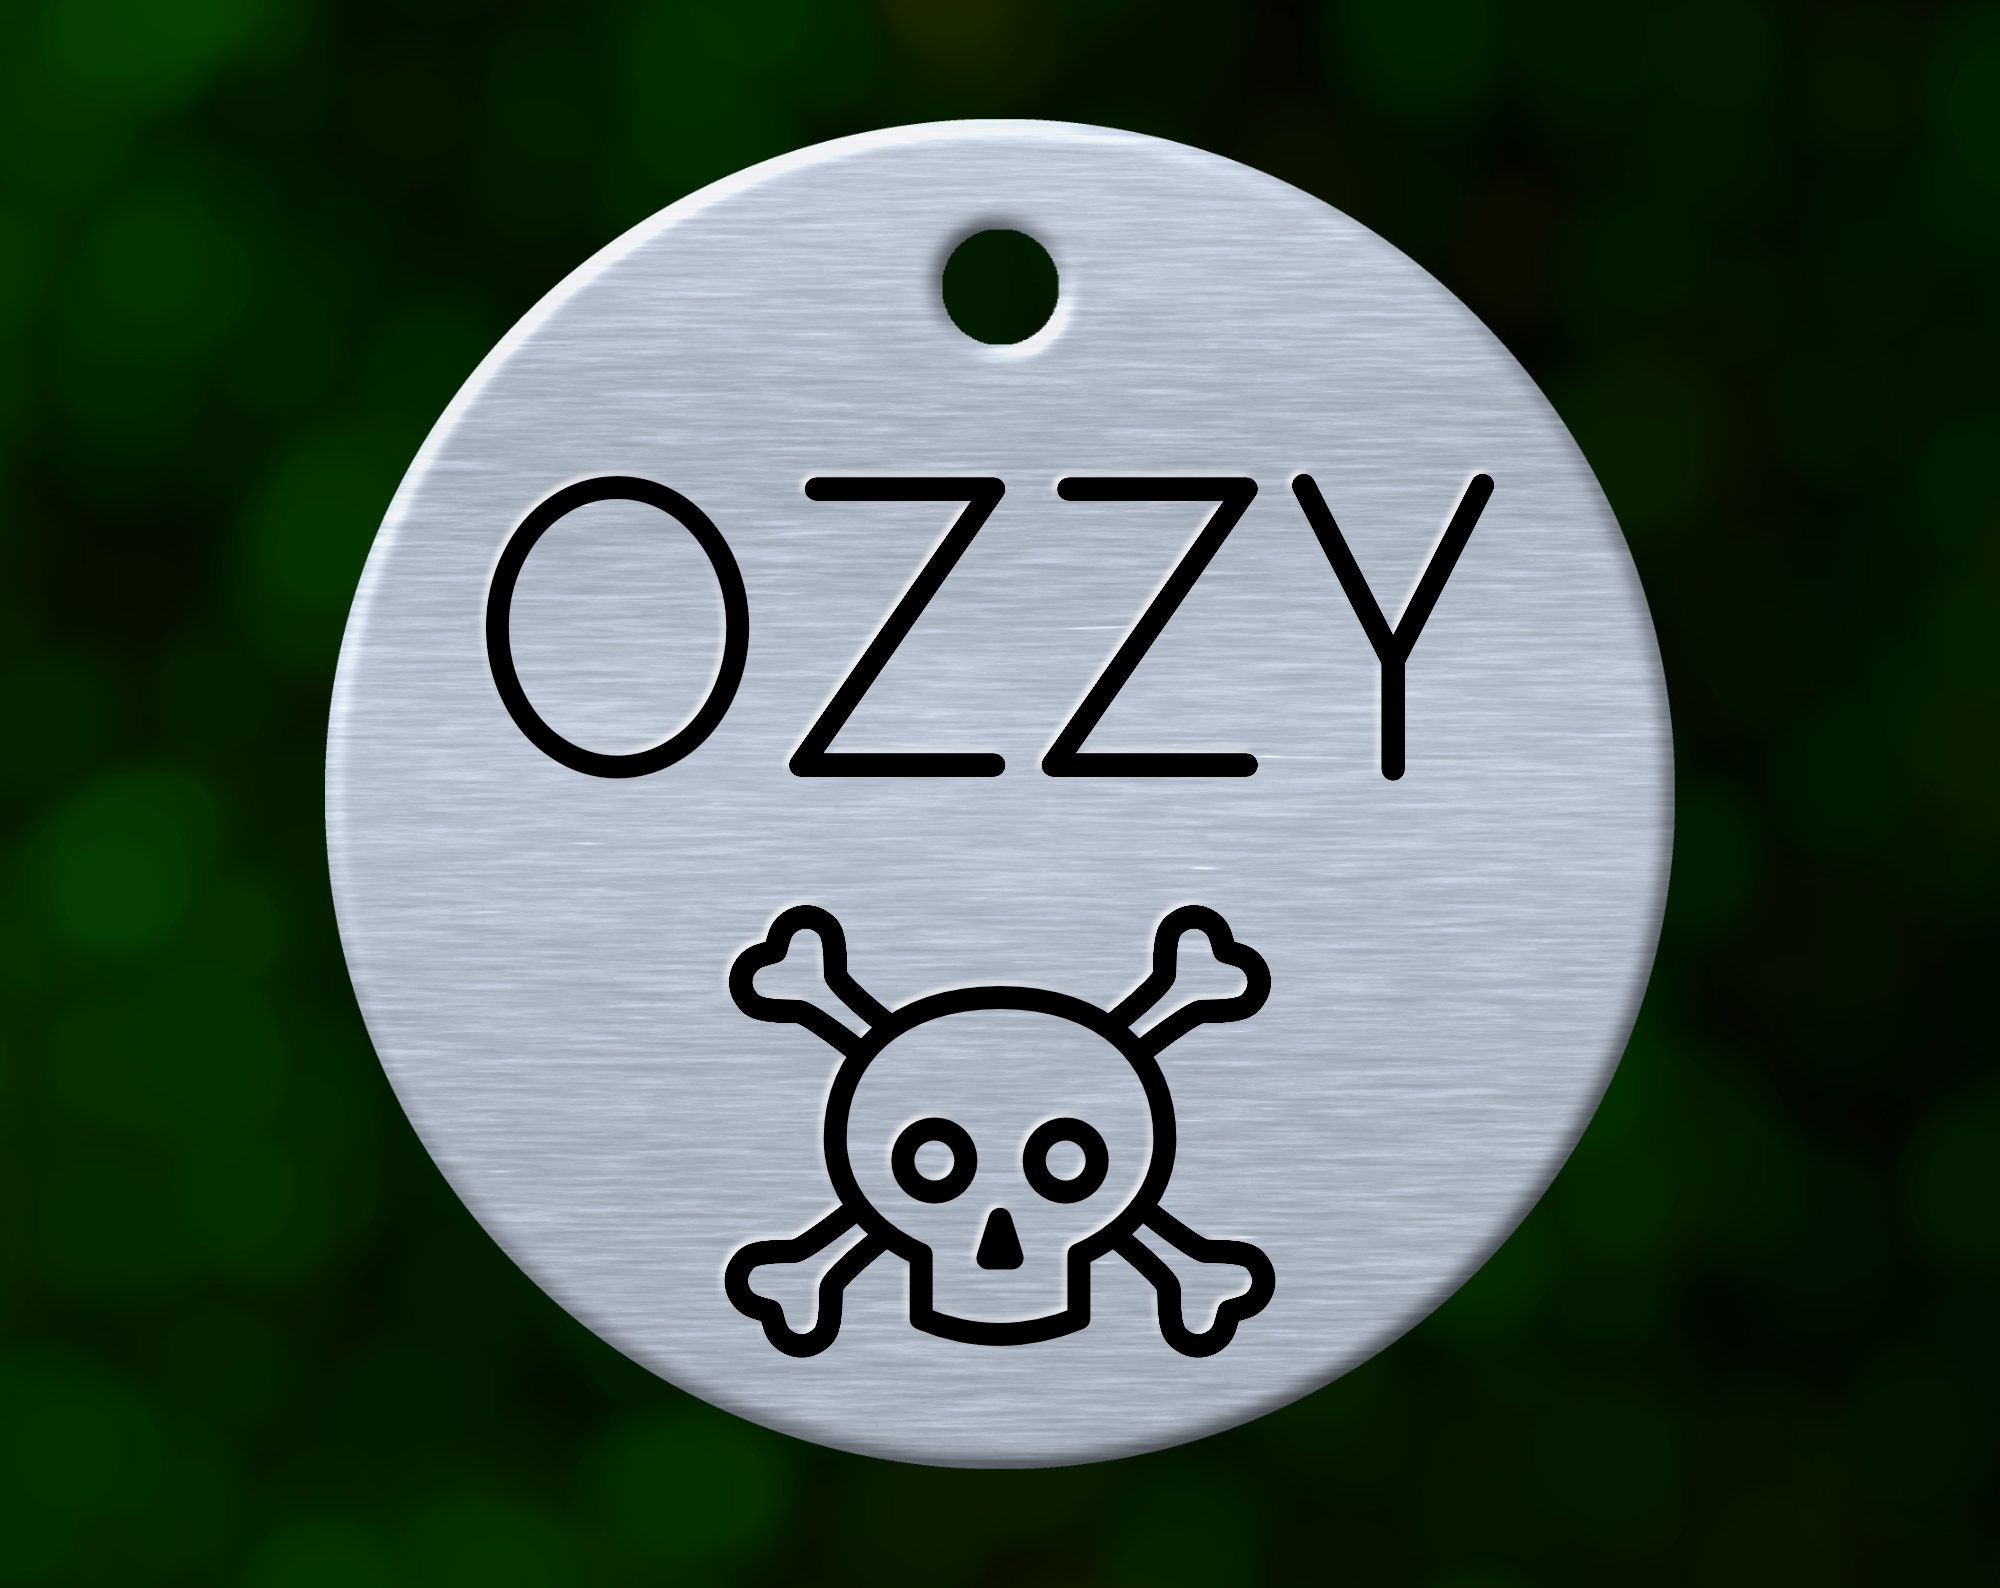 Ozzy Crazy Train Dog or Cat Collar – Custom Design Dog Collars